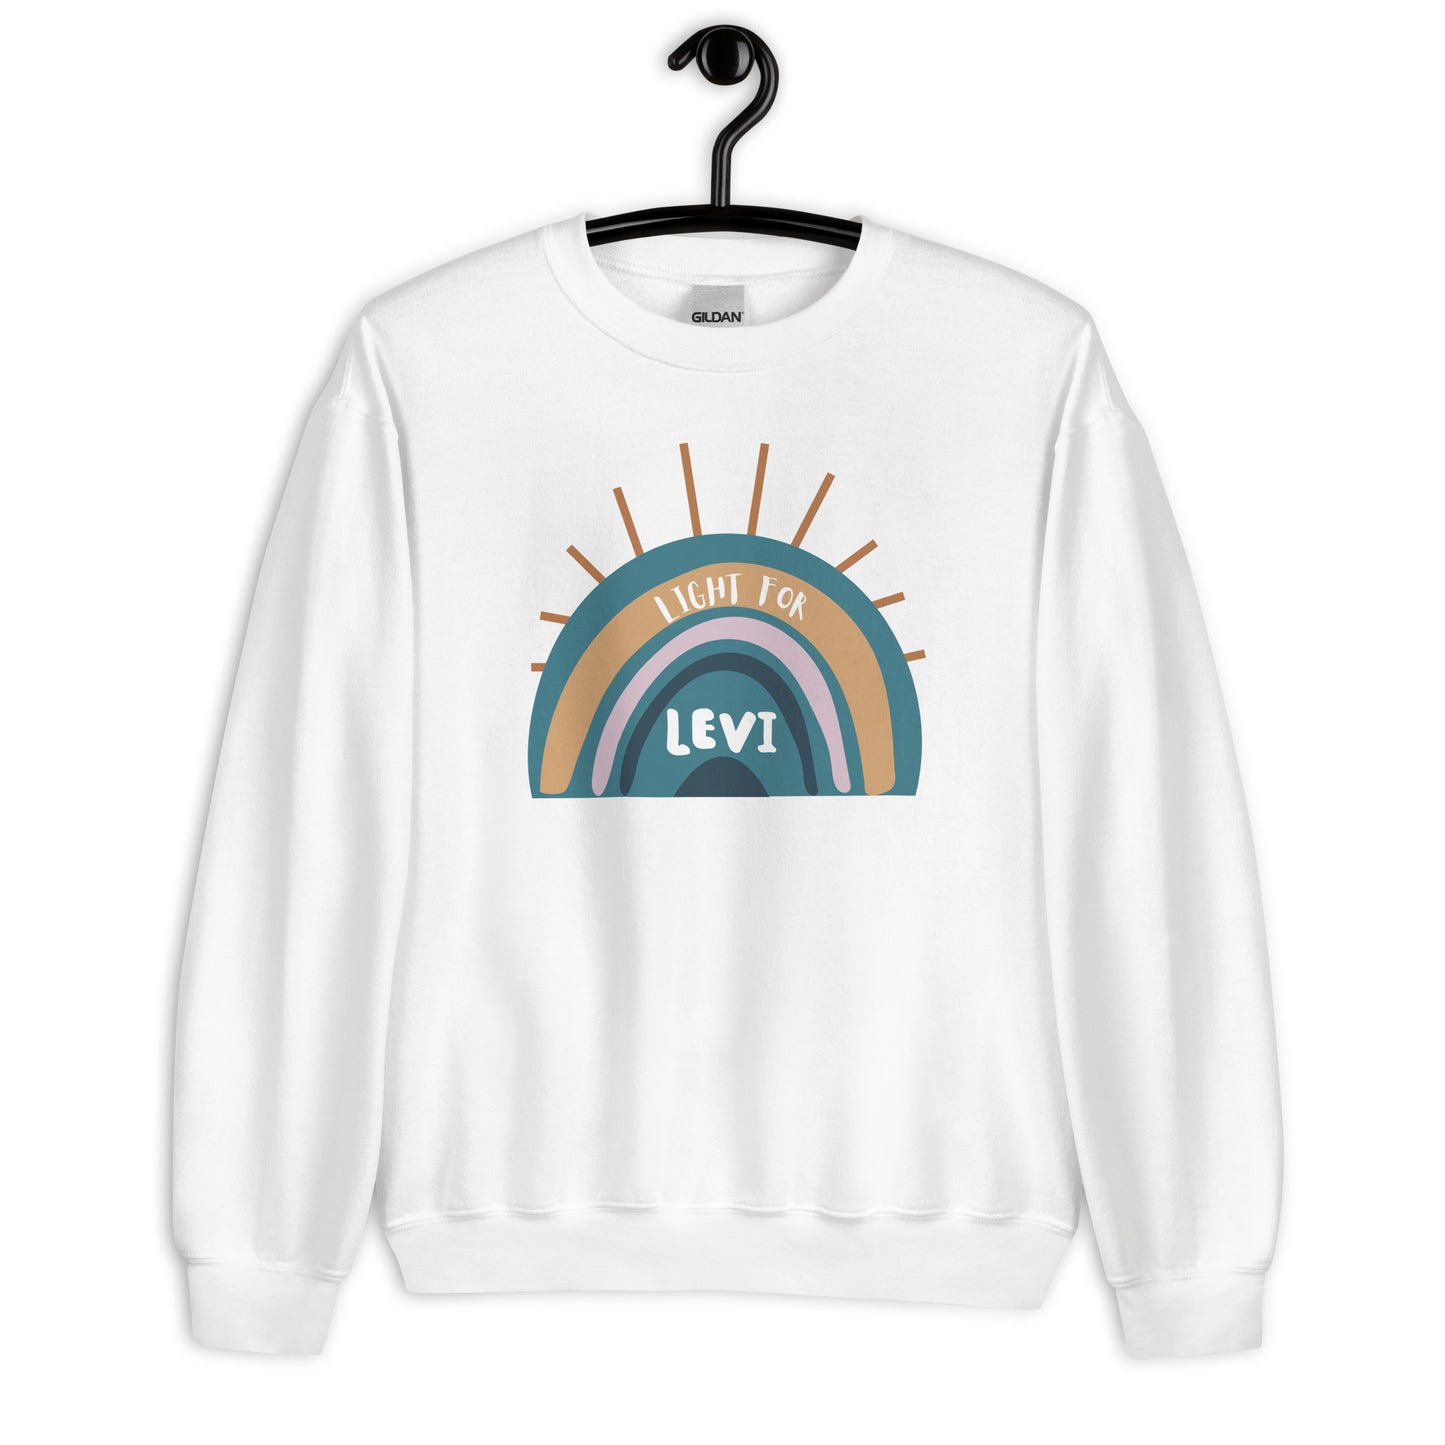 Light For Levi — Adult Unisex Crewneck Sweatshirt